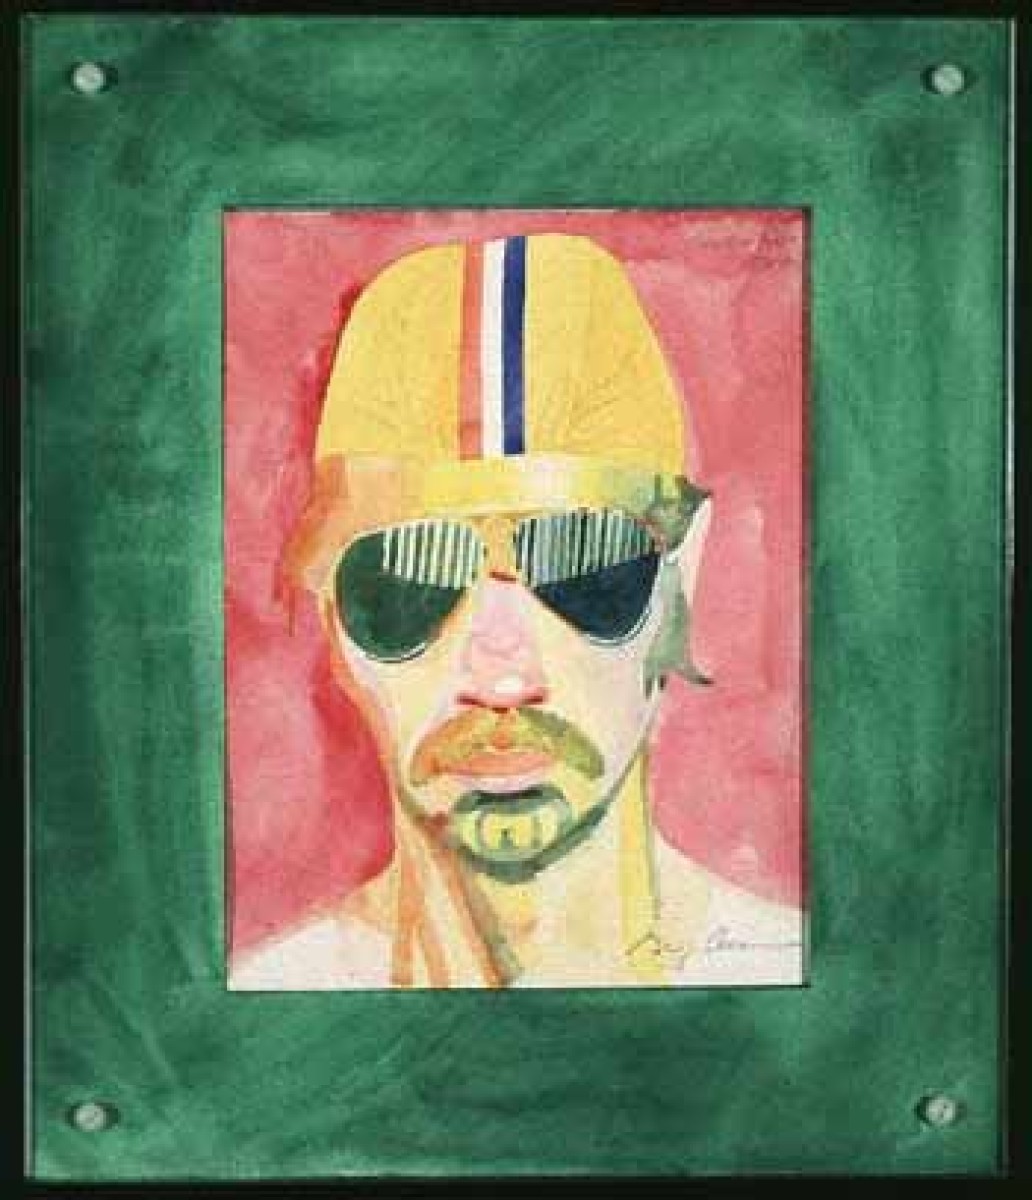 Greg Curnoe (Canadian, 1936-1992) Self-portrait July 10, 1980